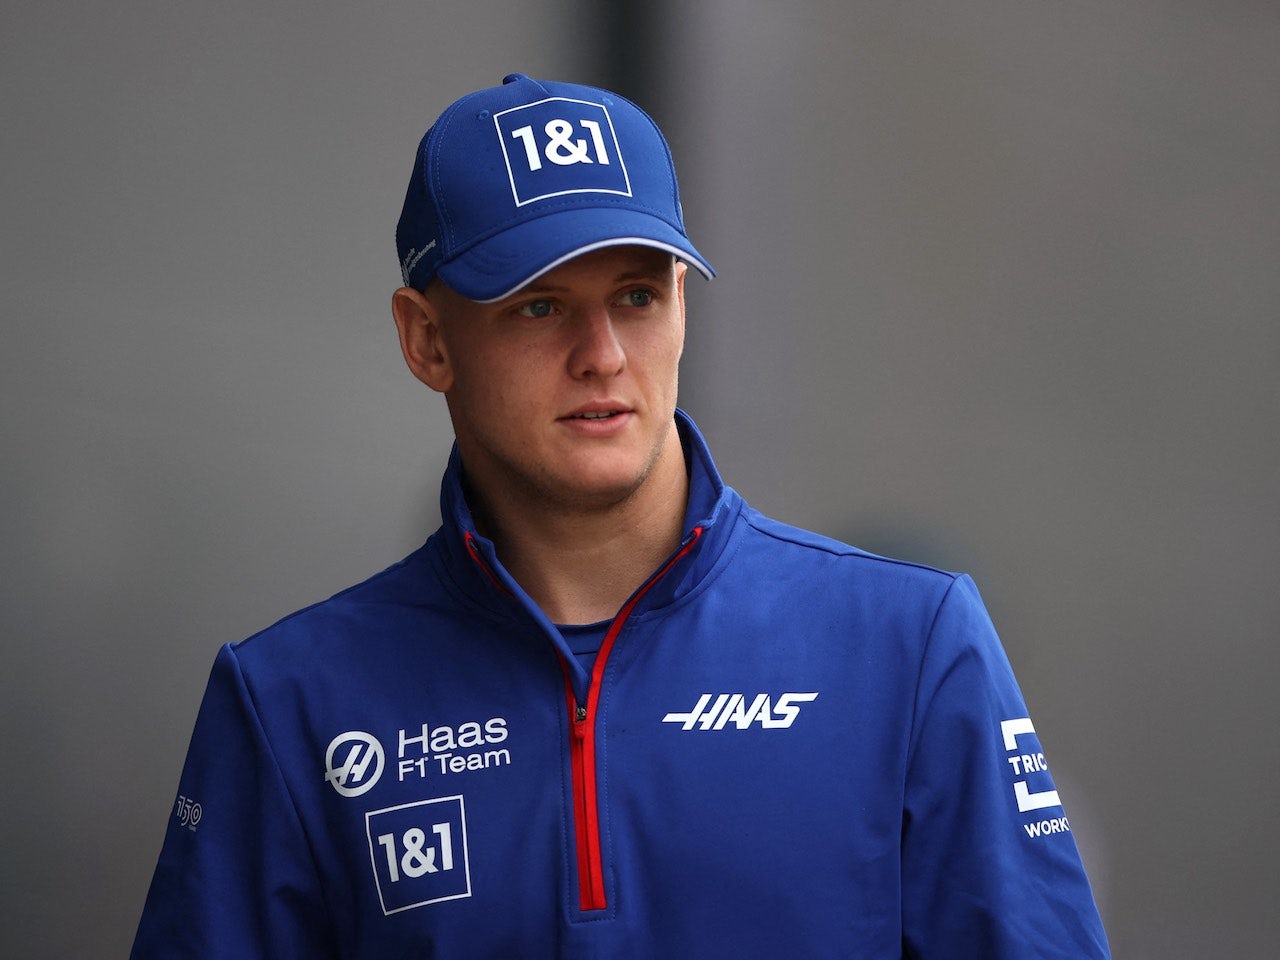 Schumacher has made 'big step' forward - Magnussen